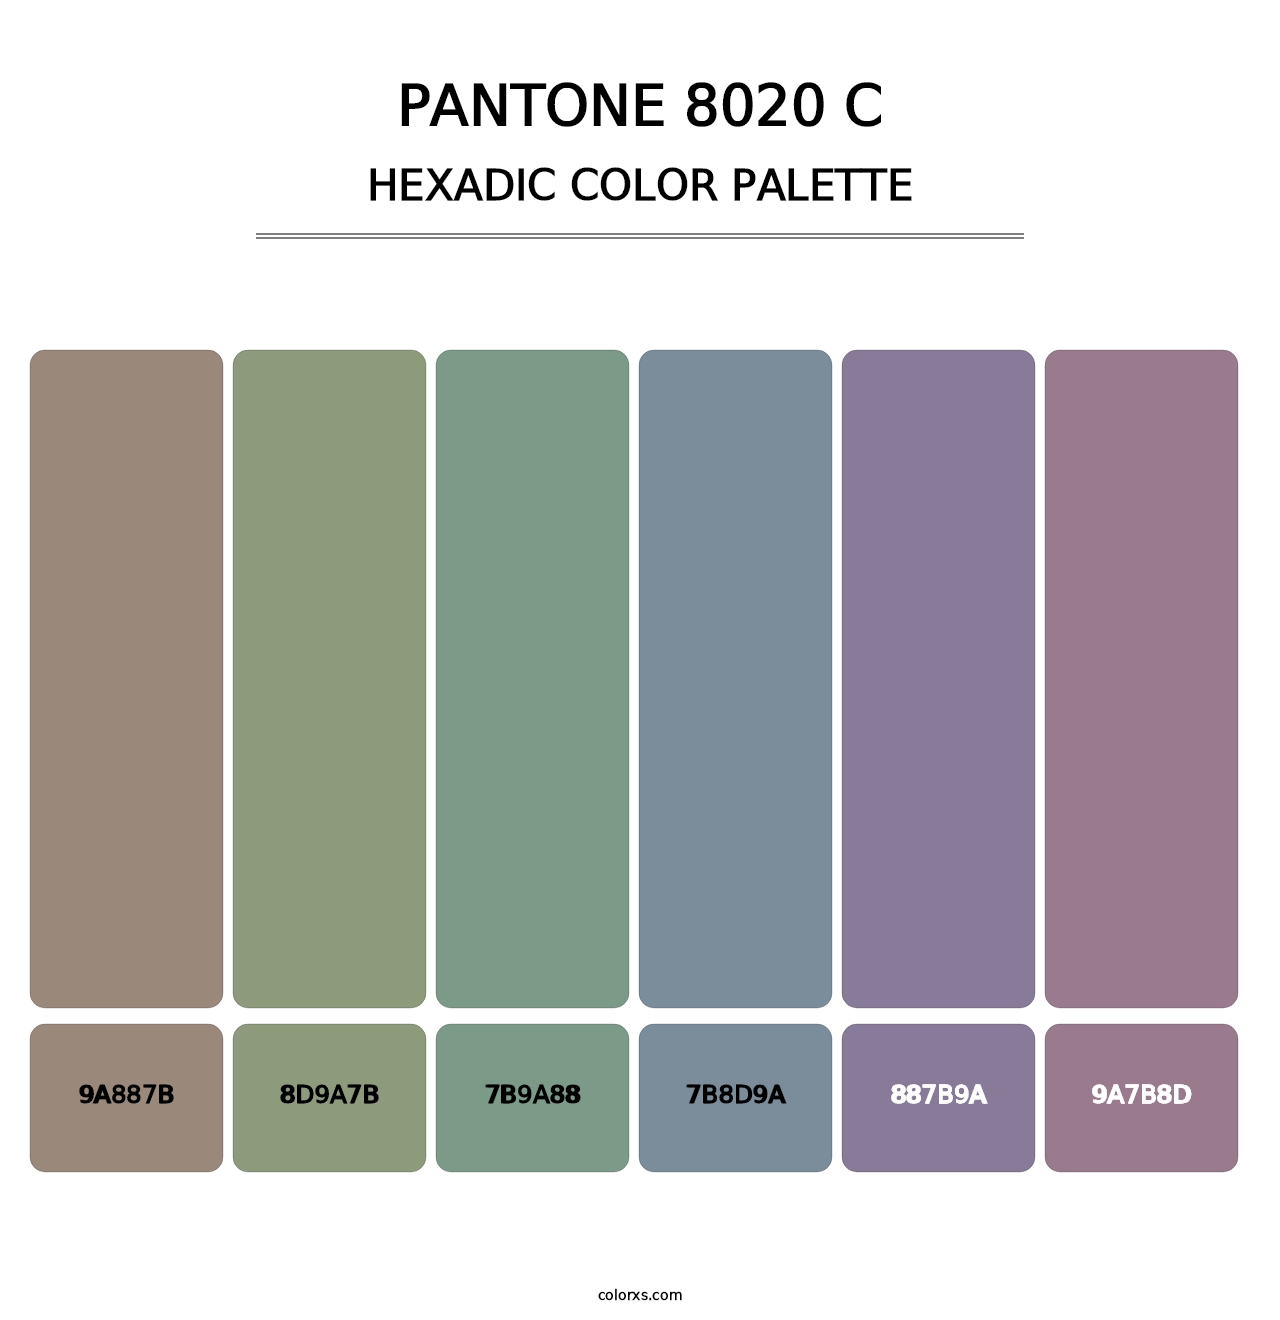 PANTONE 8020 C - Hexadic Color Palette